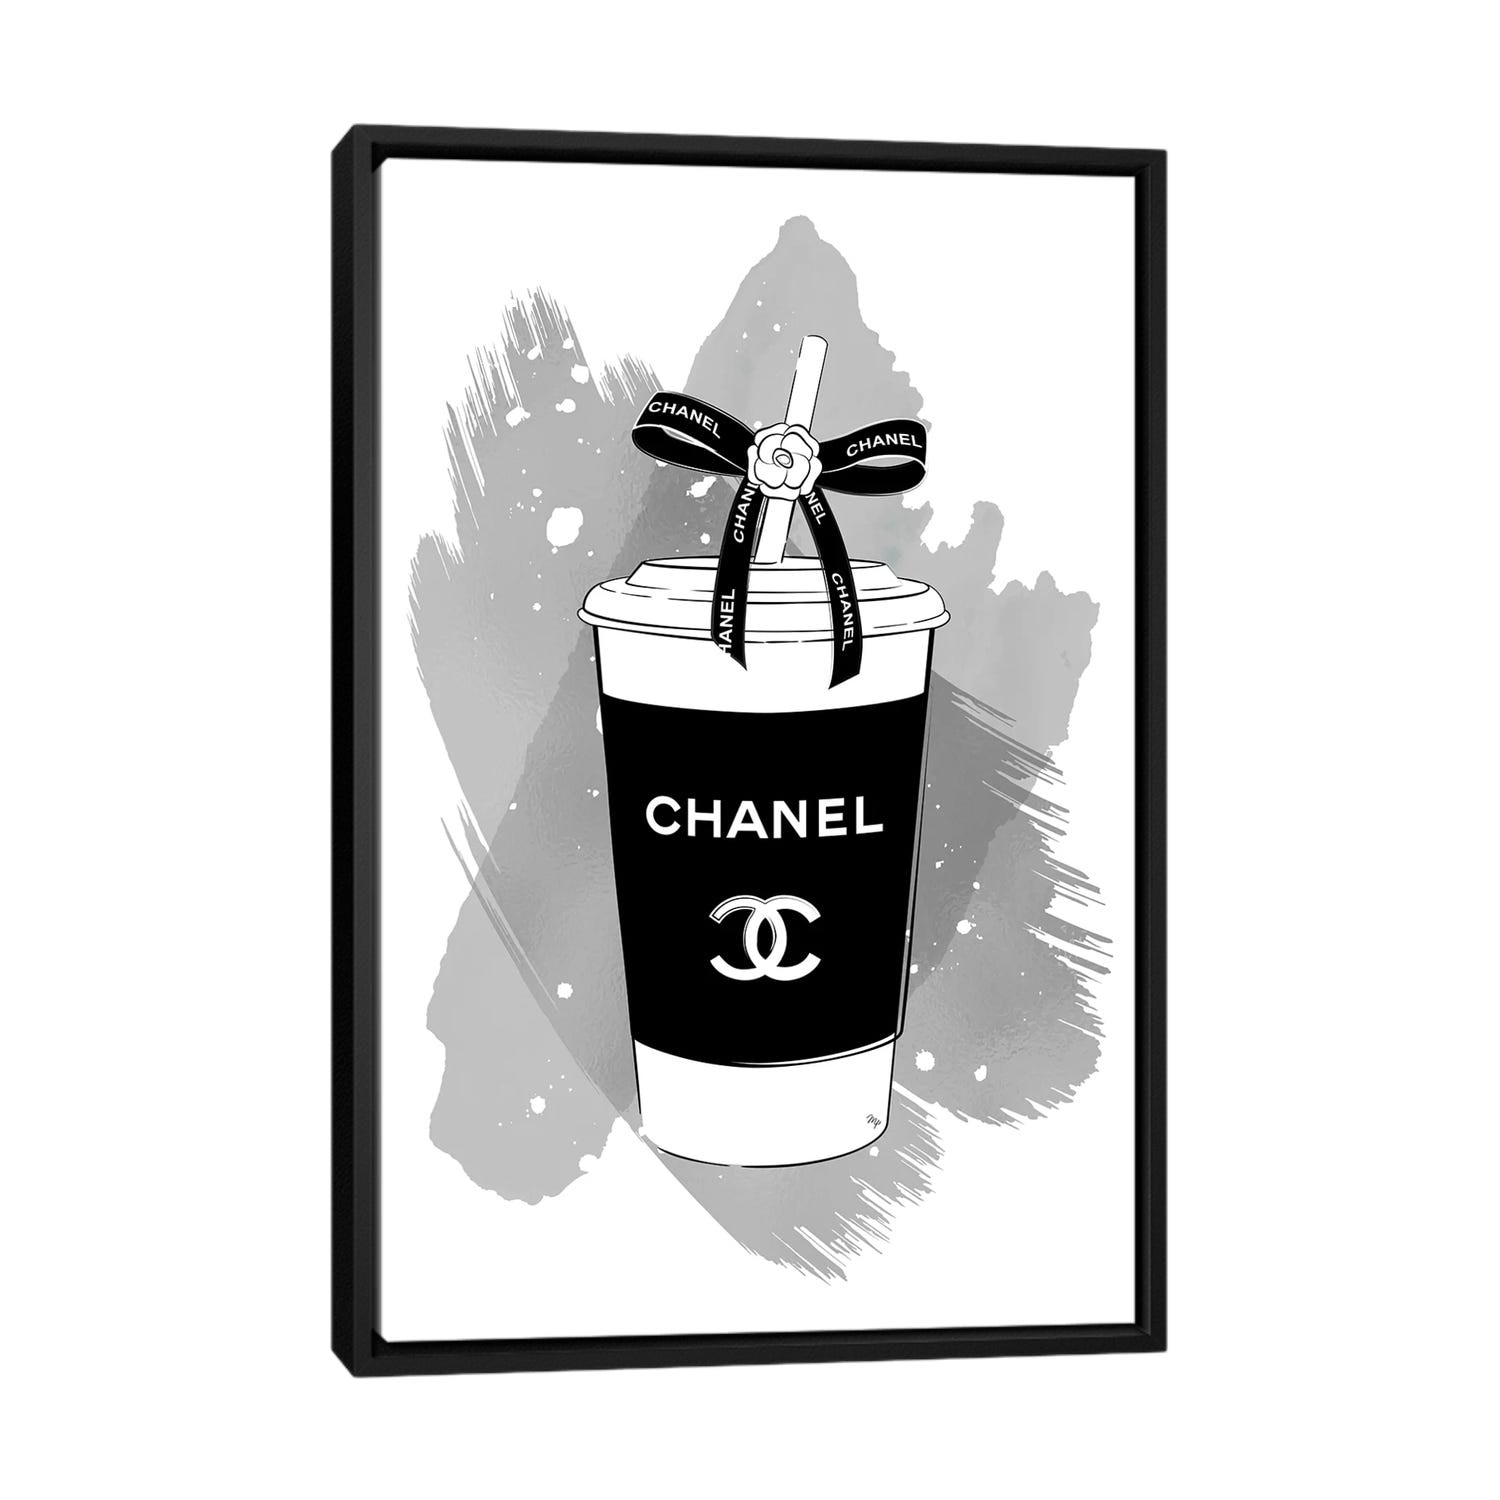 Framed Canvas Art (White Floating Frame) - Pink Chanel Logo by Martina Pavlova ( Fashion > Fashion Brands > Chanel art) - 26x18 in